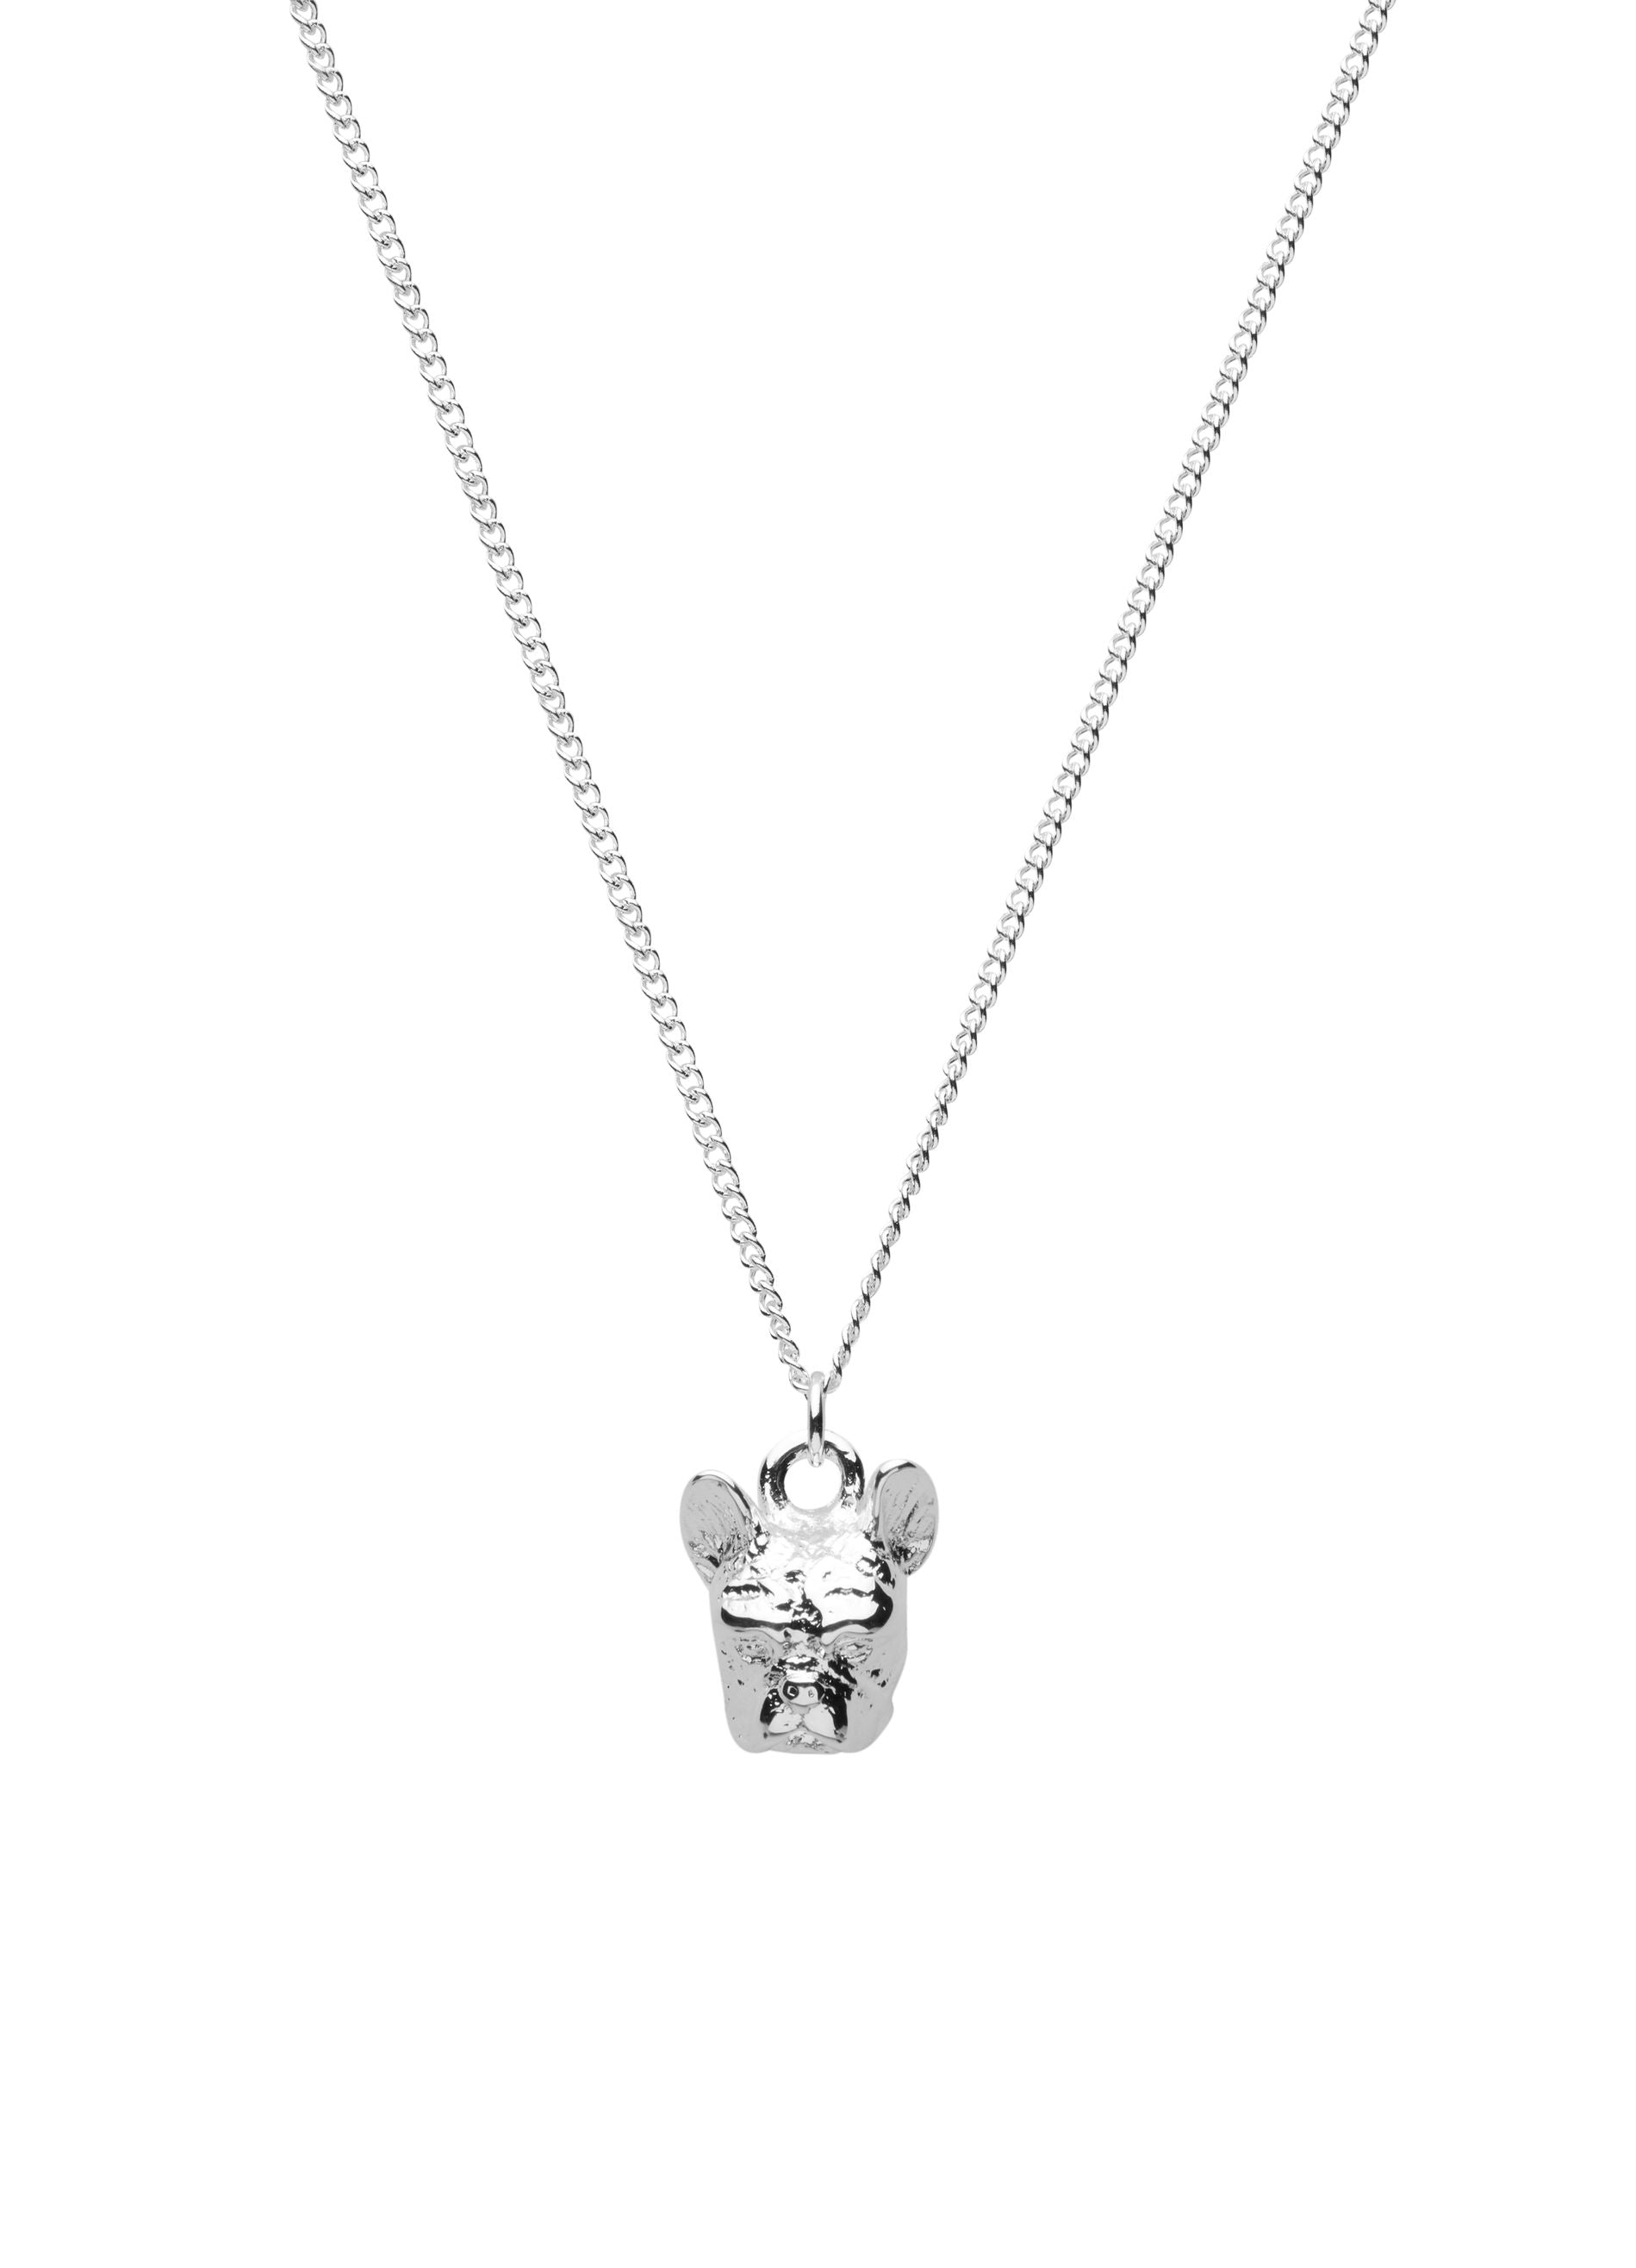 Skultuna French Bulldog Necklace, Silver Plated